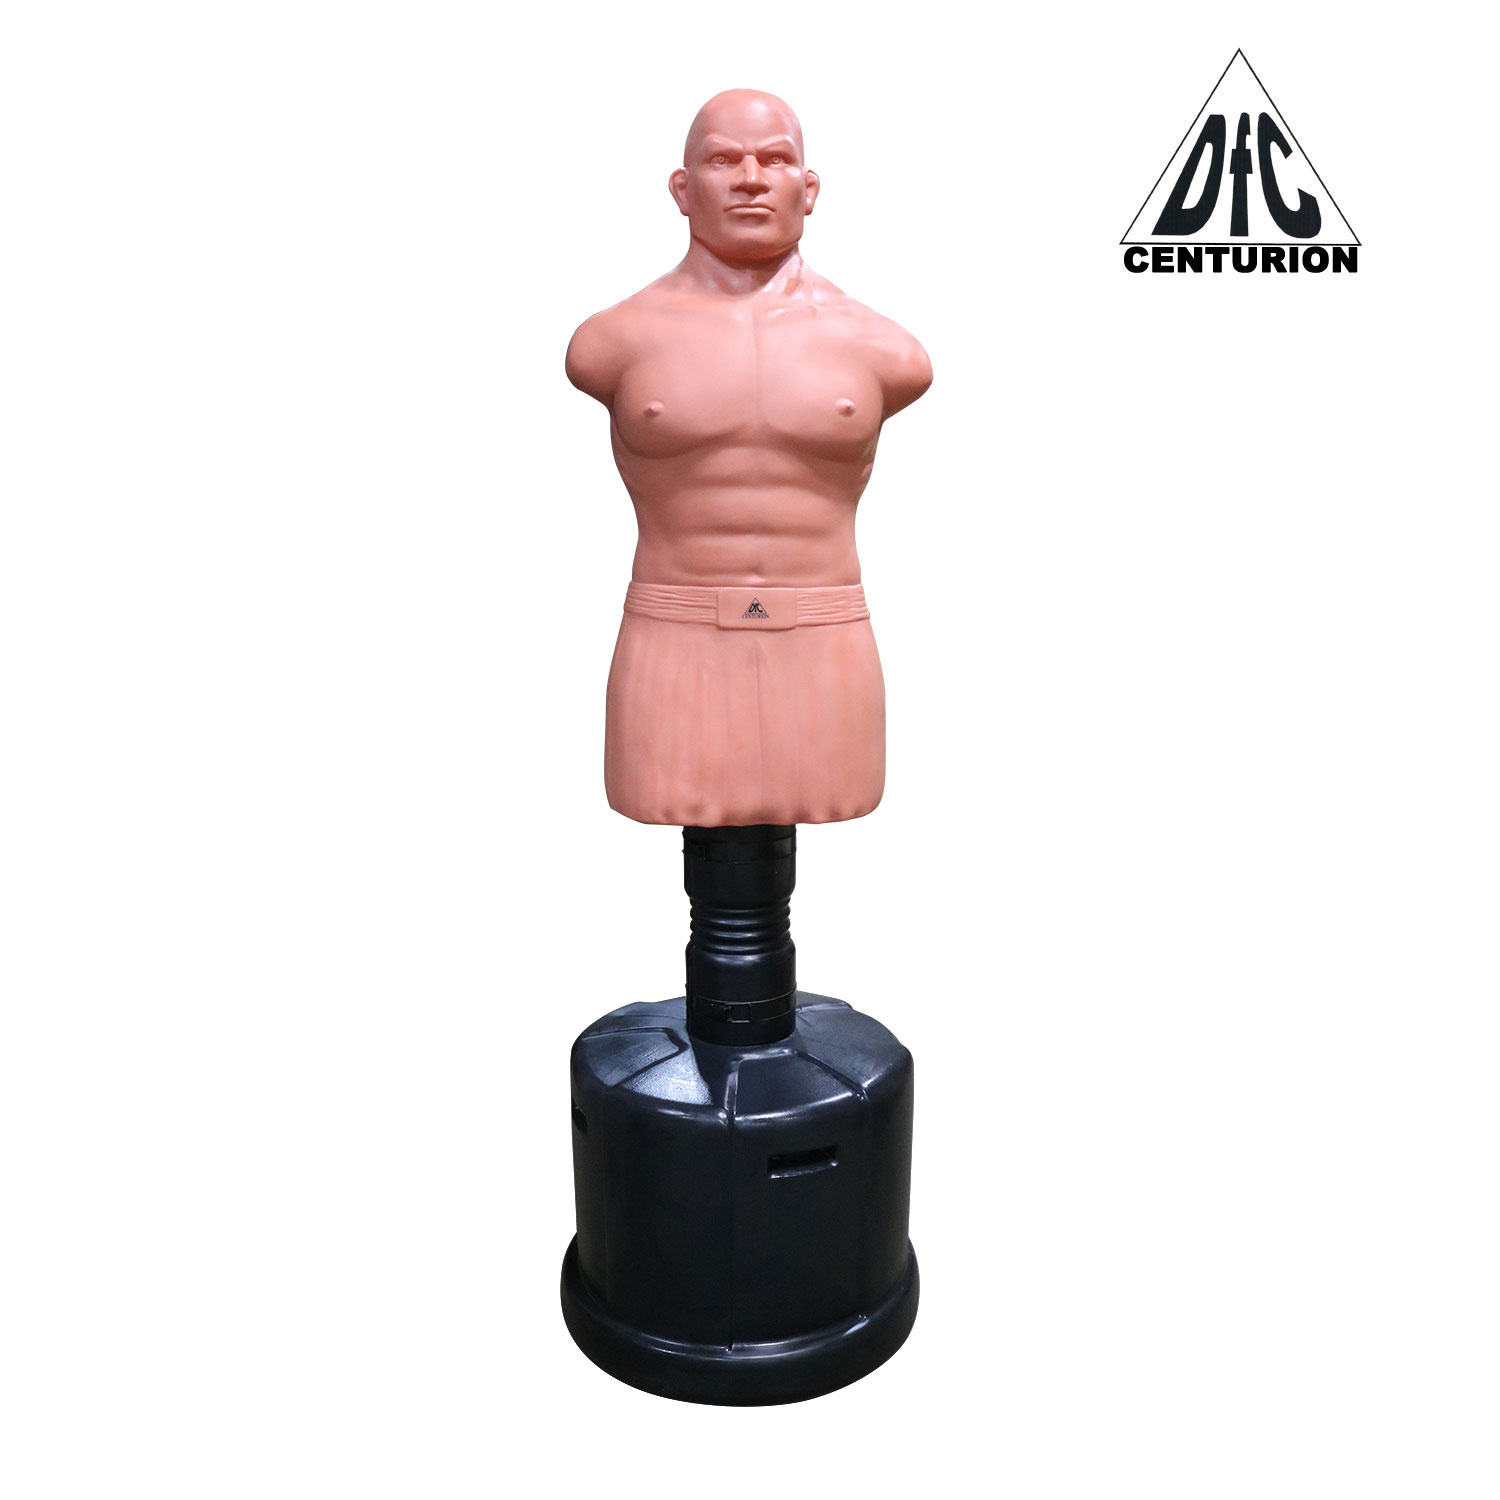 Centurion Boxing Punching Man-Heavy водоналивной - бежевый в СПб по цене 45990 ₽ в категории боксерские мешки и груши DFC